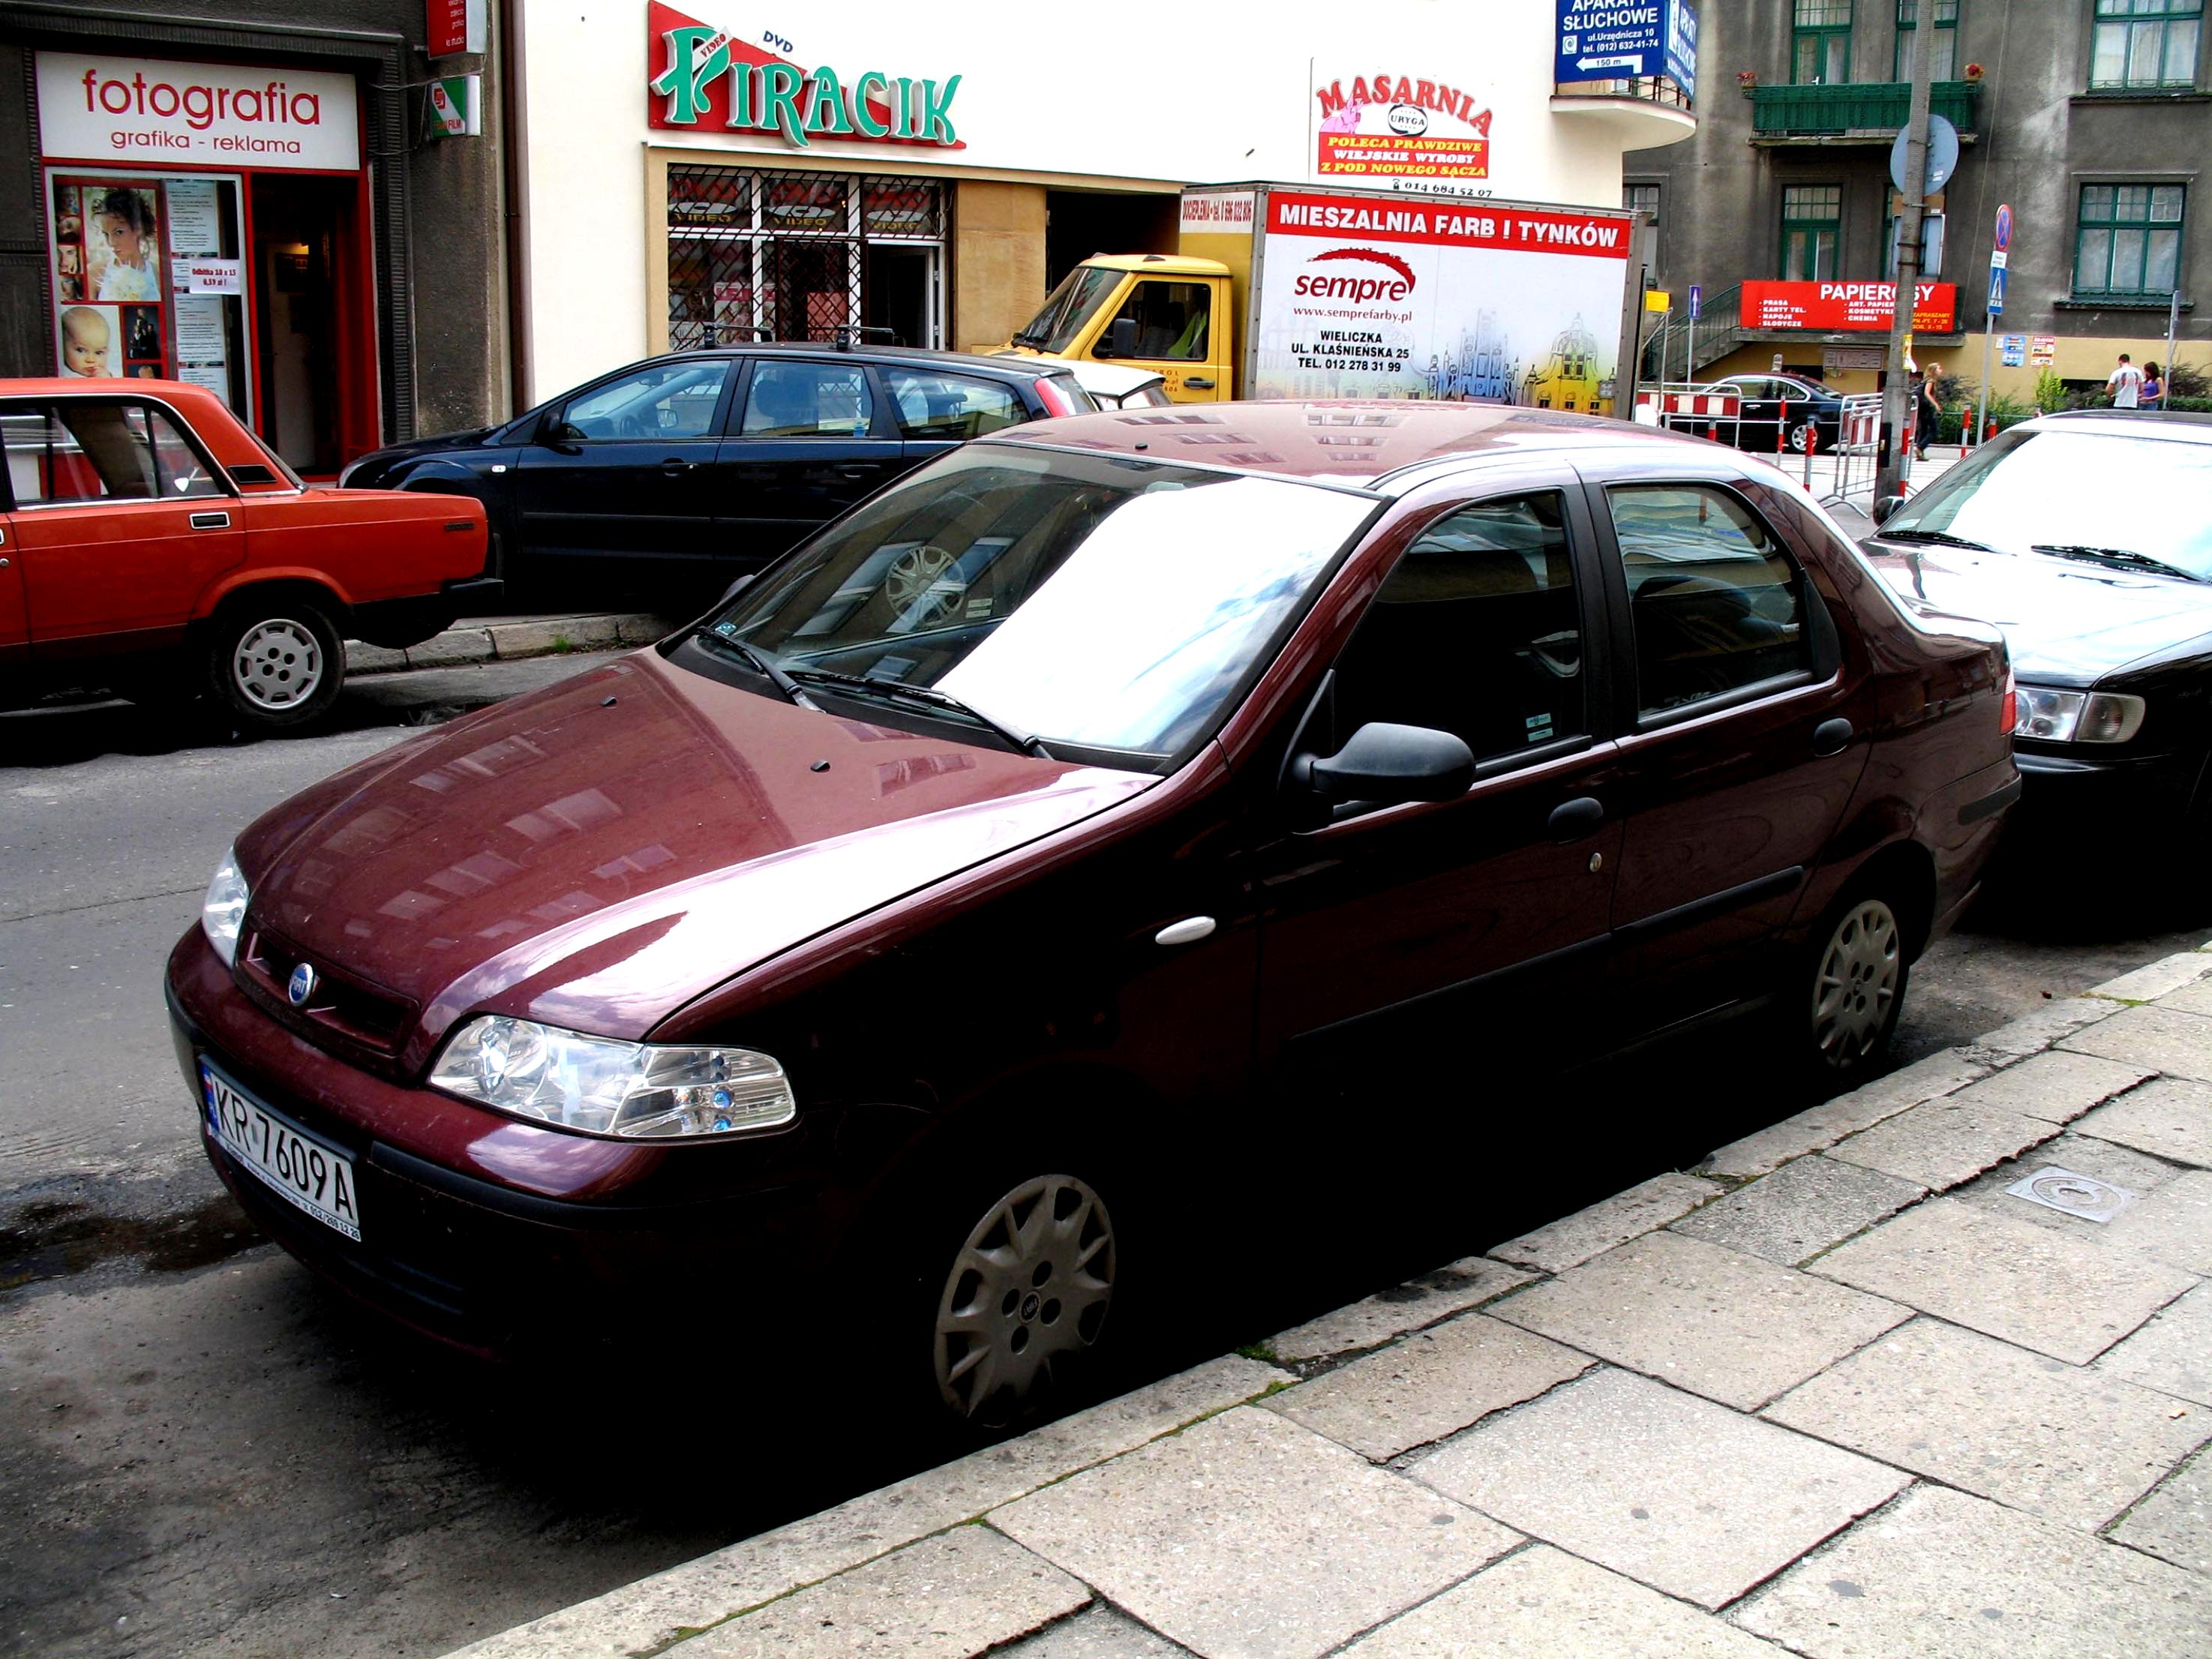 Fiat Albea/Siena 2002 on